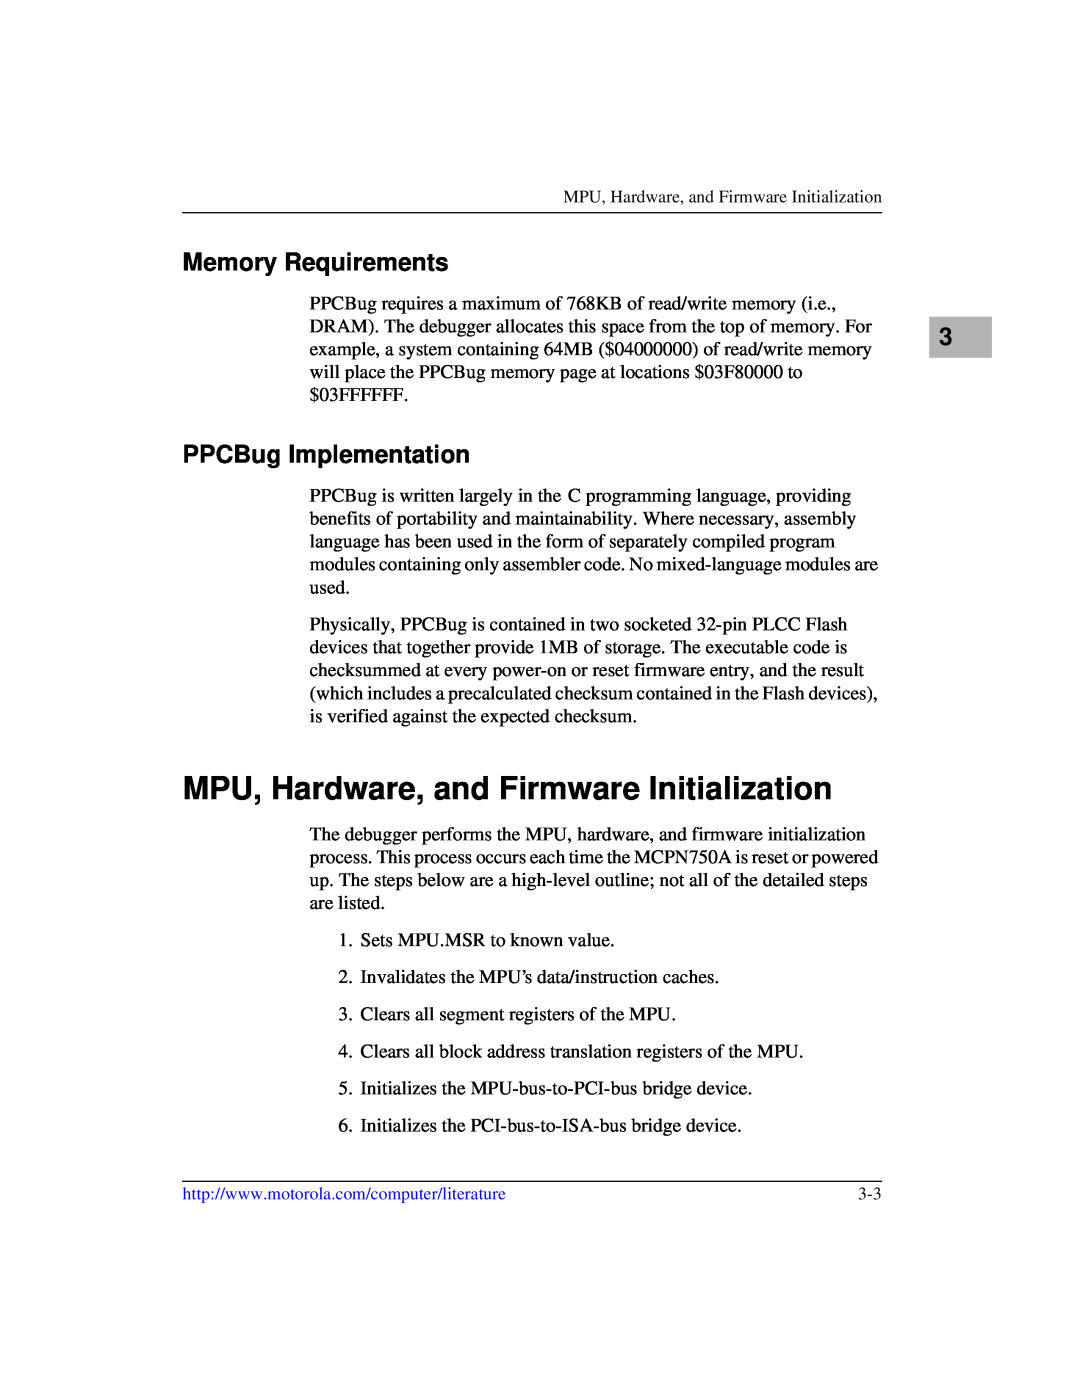 Motorola IH5, MCPN750A manual MPU, Hardware, and Firmware Initialization, Memory Requirements, PPCBug Implementation 